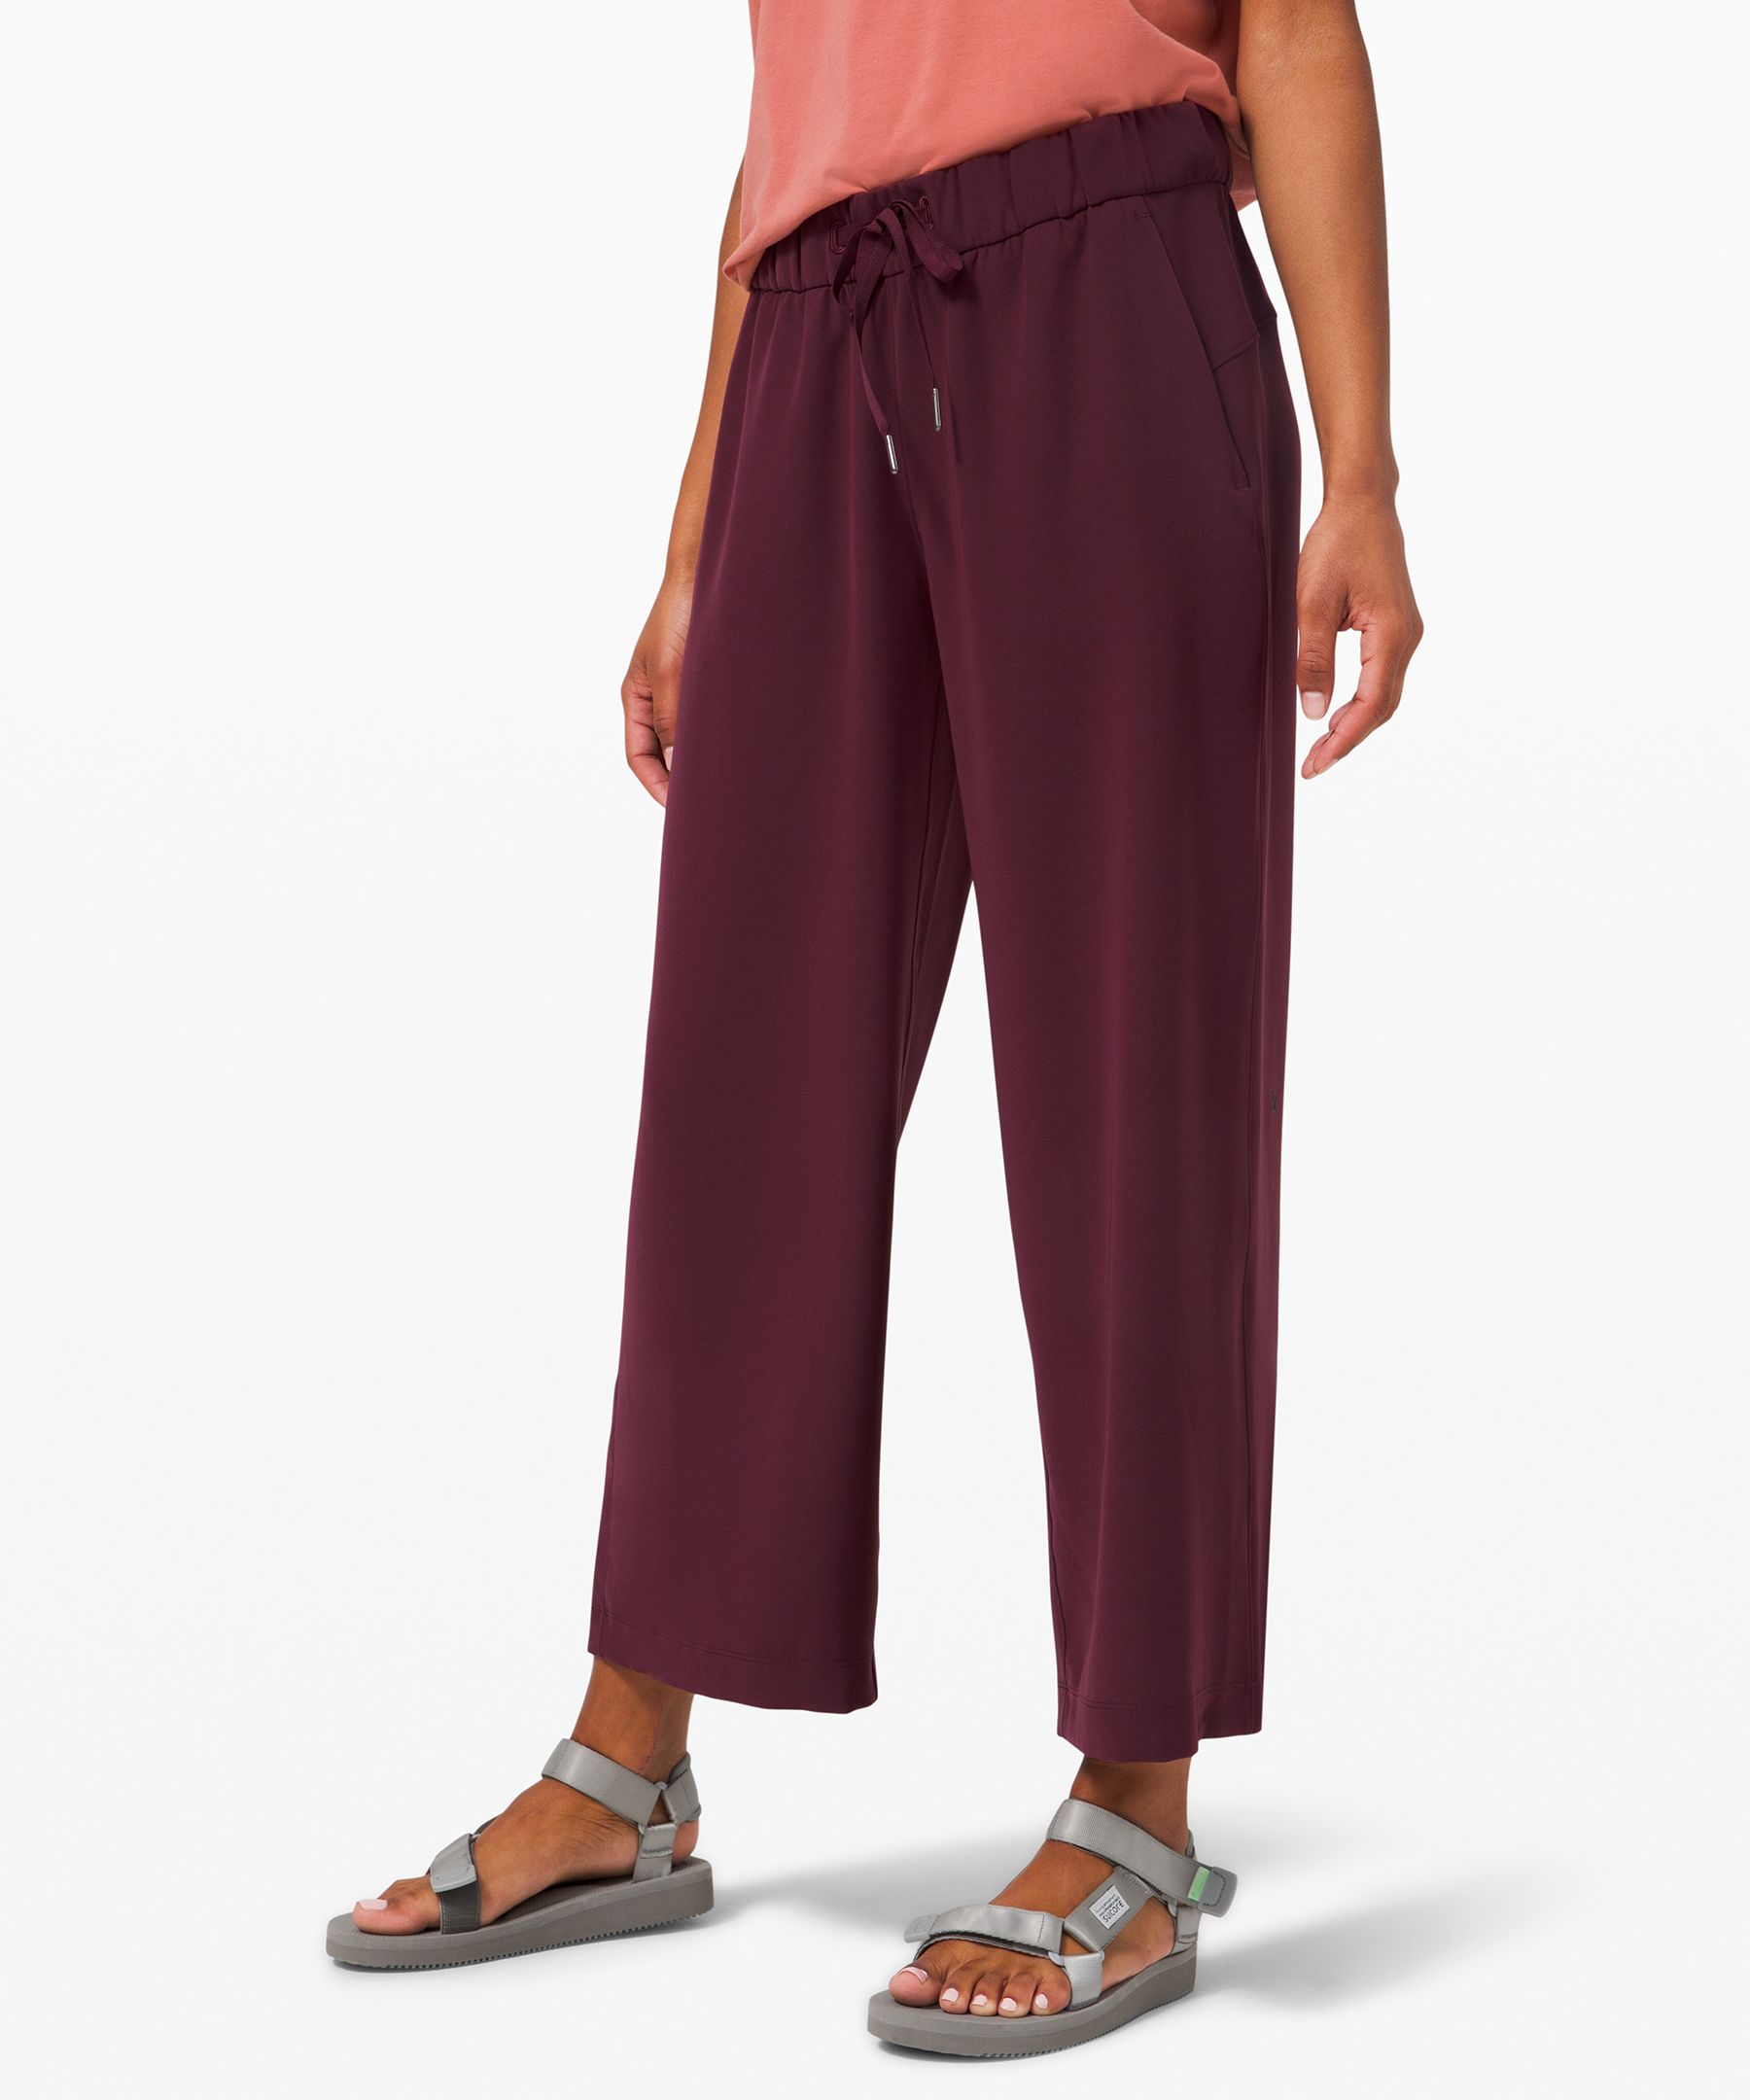 lululemon women's pants